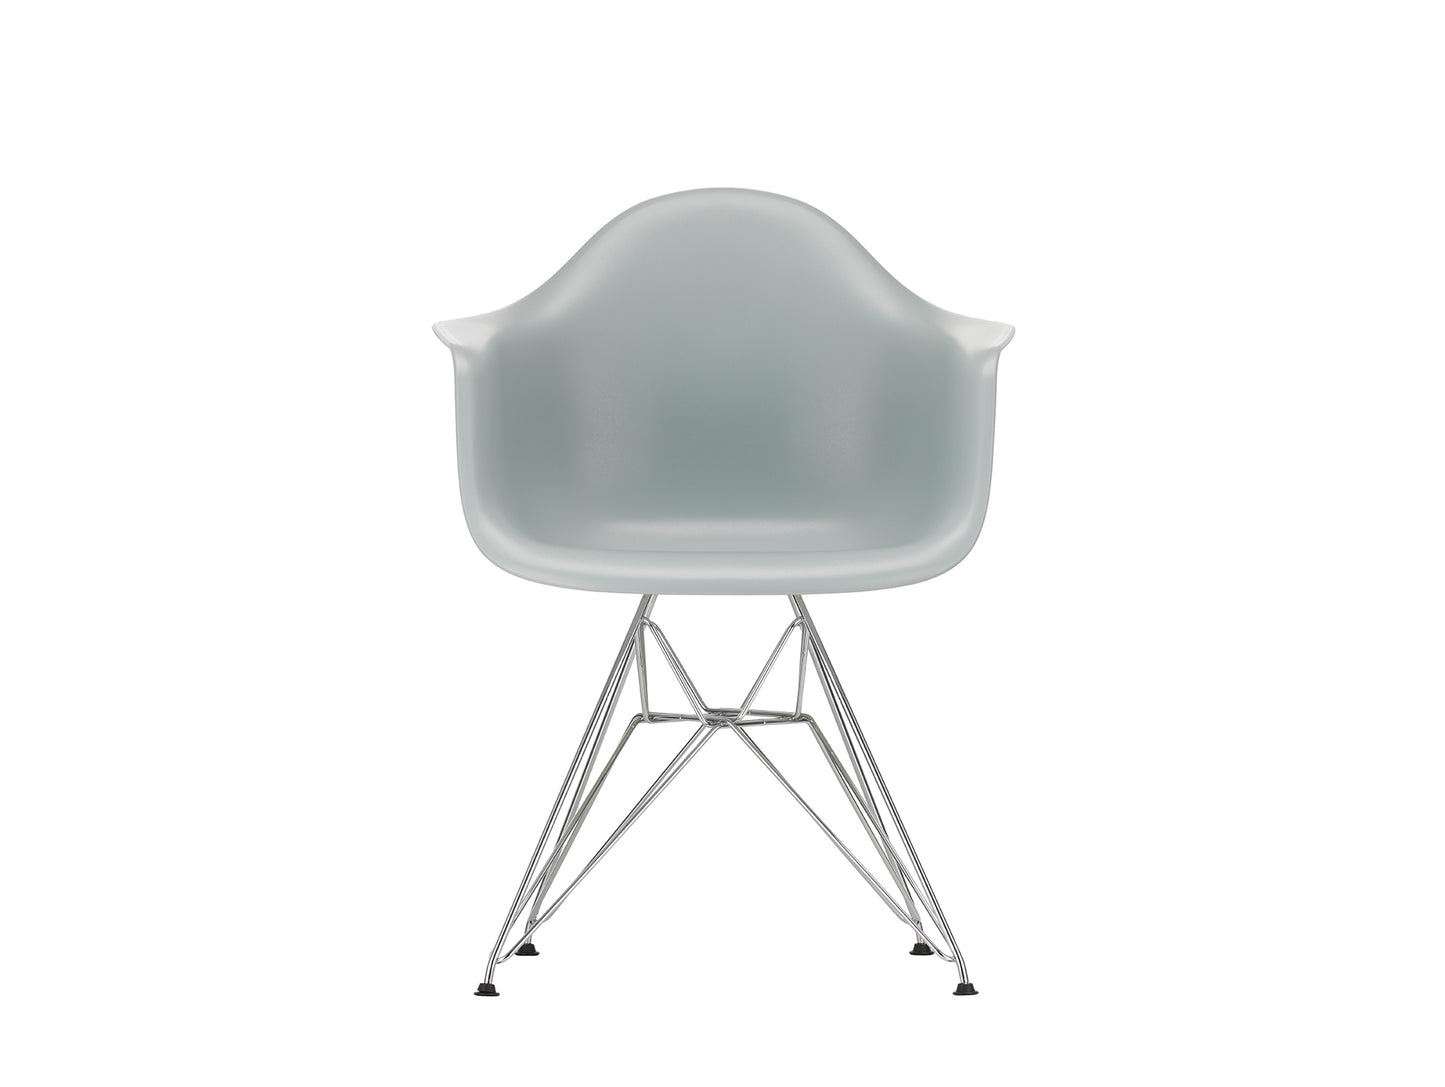 Eames DAR Plastic Armchair RE by Vitra - 24 Light Grey Shell / Chrome Base